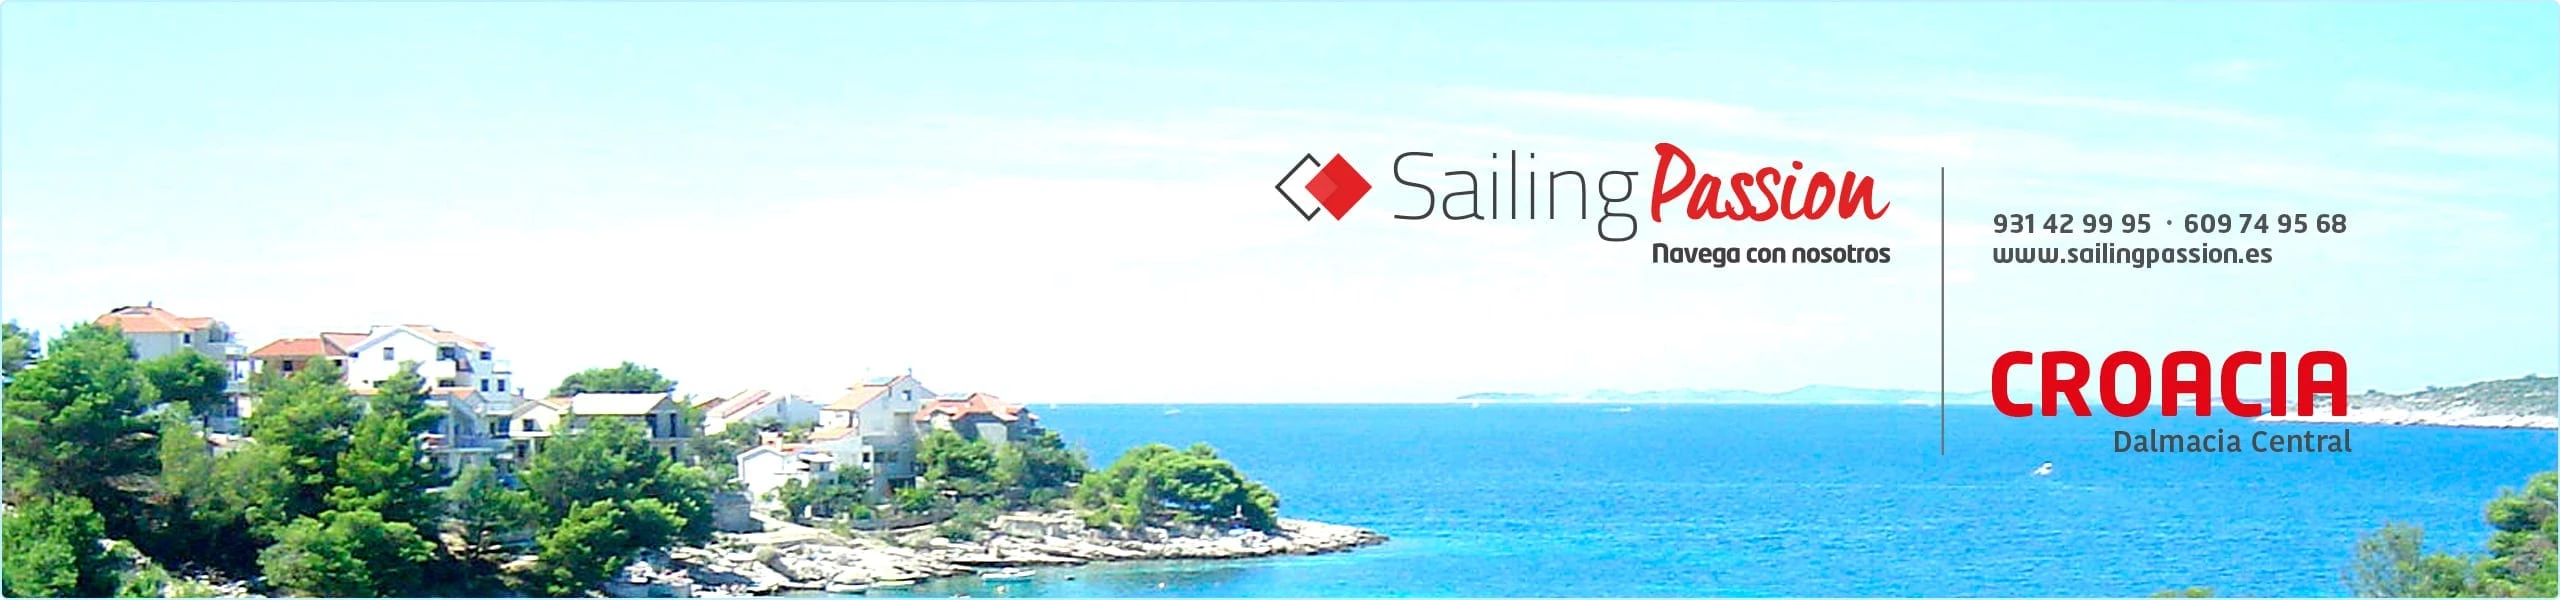 SailingPassion. banner Croacia copia 1